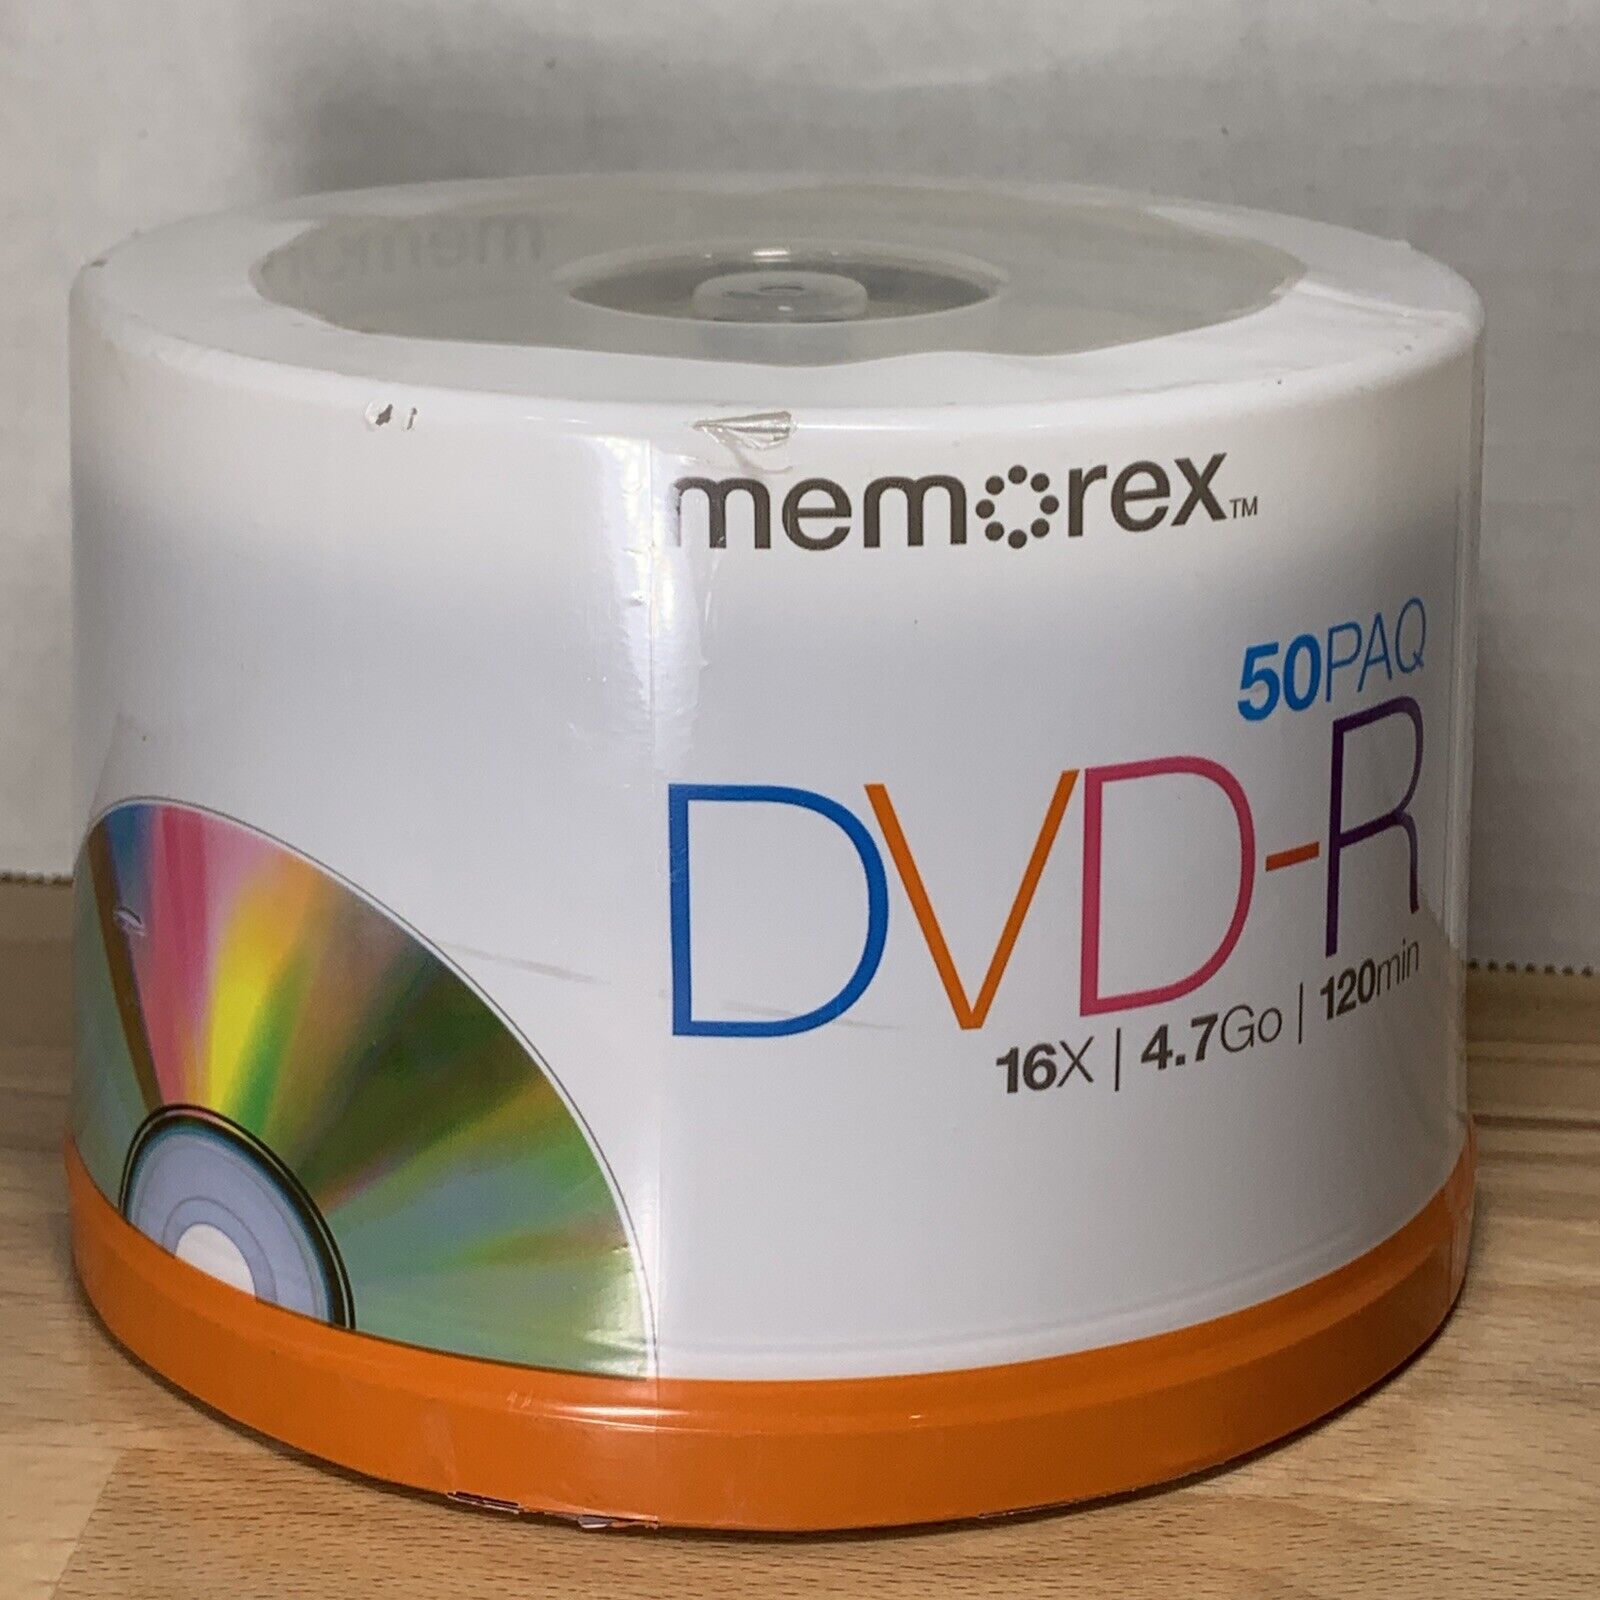 Memorex 50 Pack DVD-R 16X Blank 4.7GB 120 Min Recordable Discs - NEW